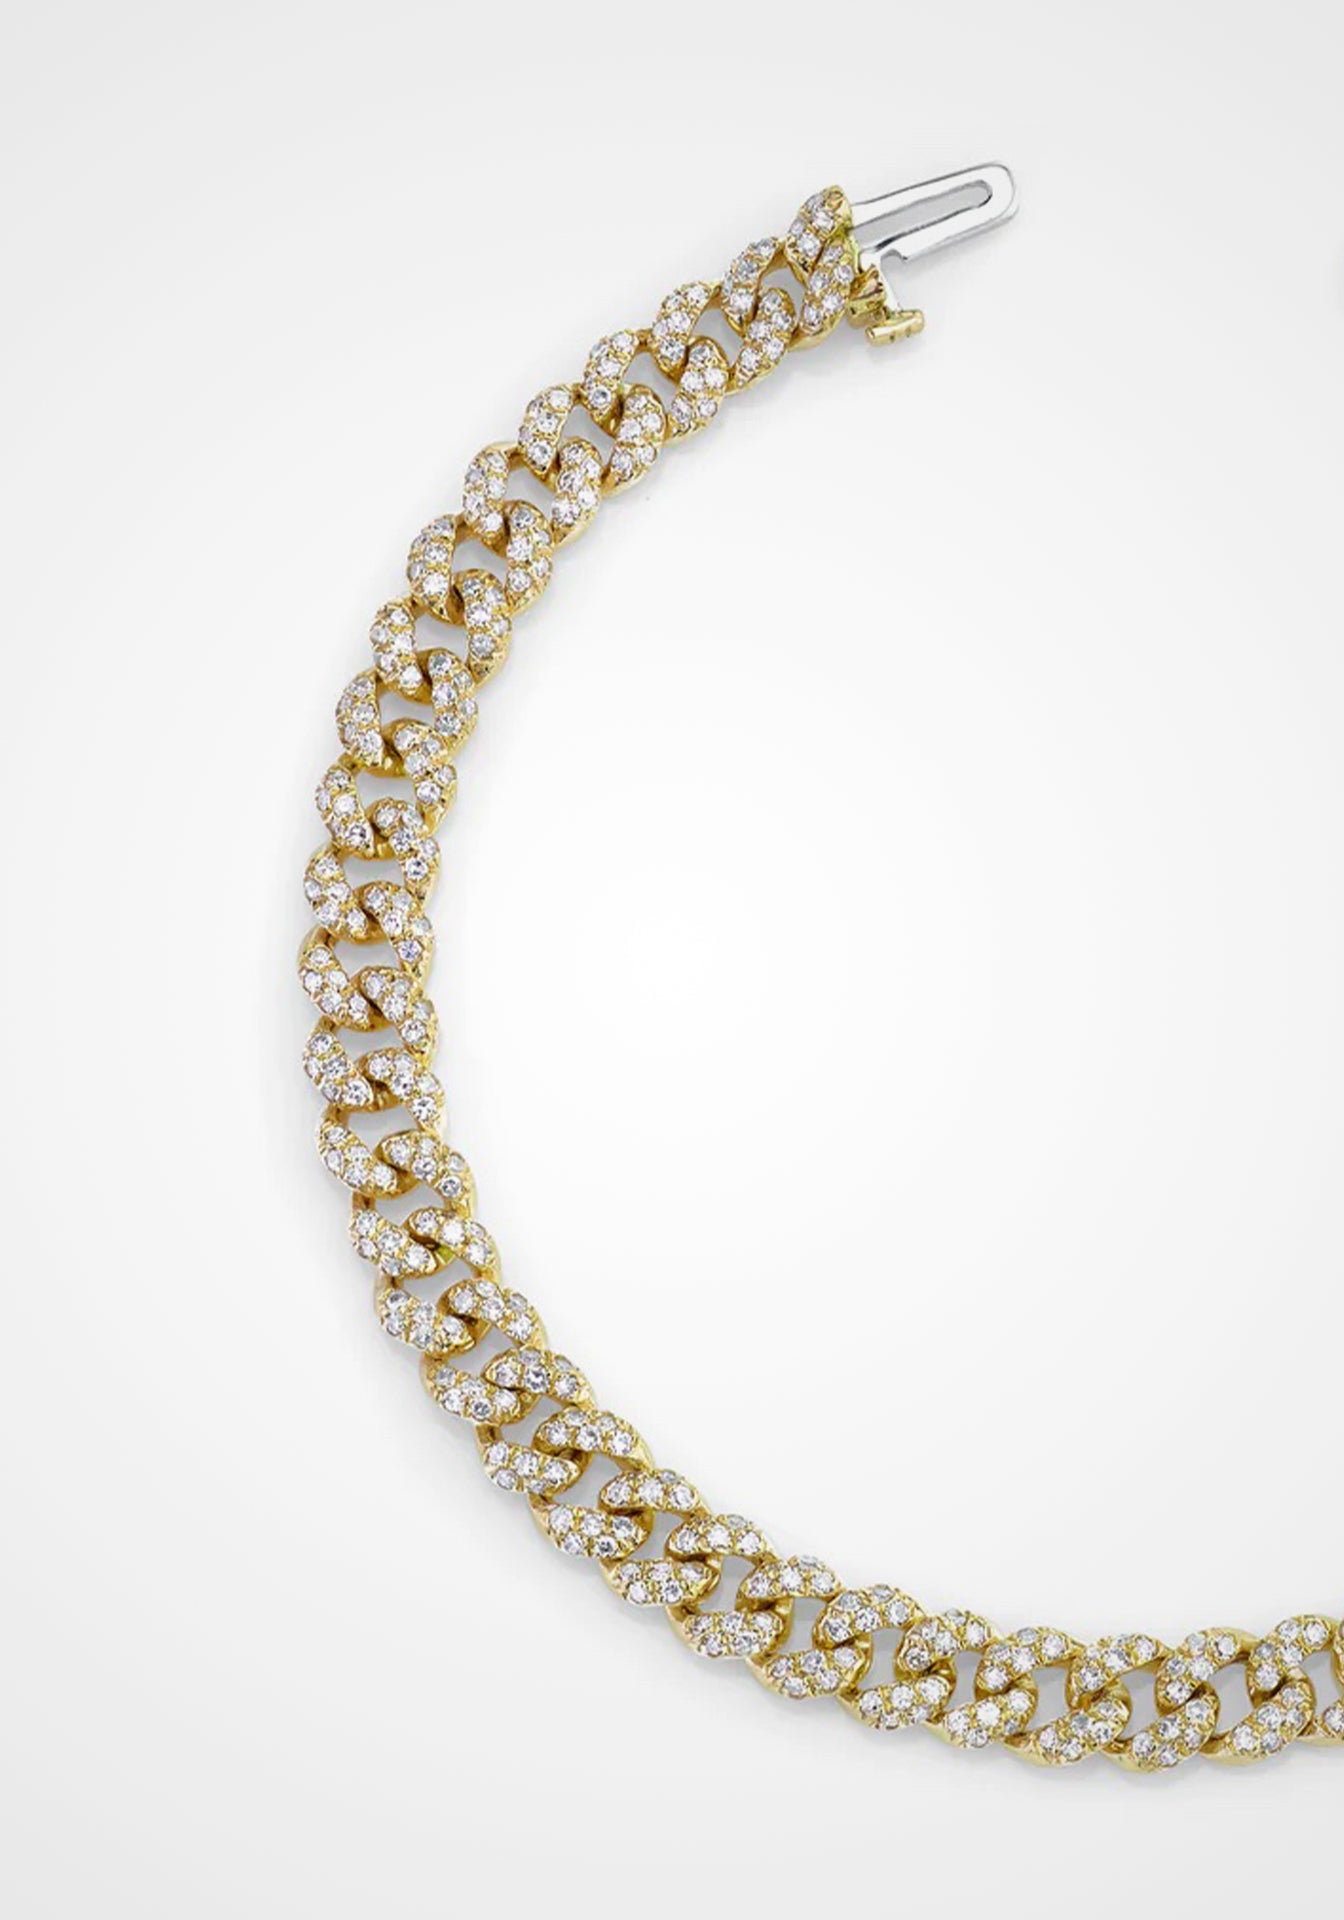 Mini Link, 18K Yellow Gold + Pavé Diamond Bracelet